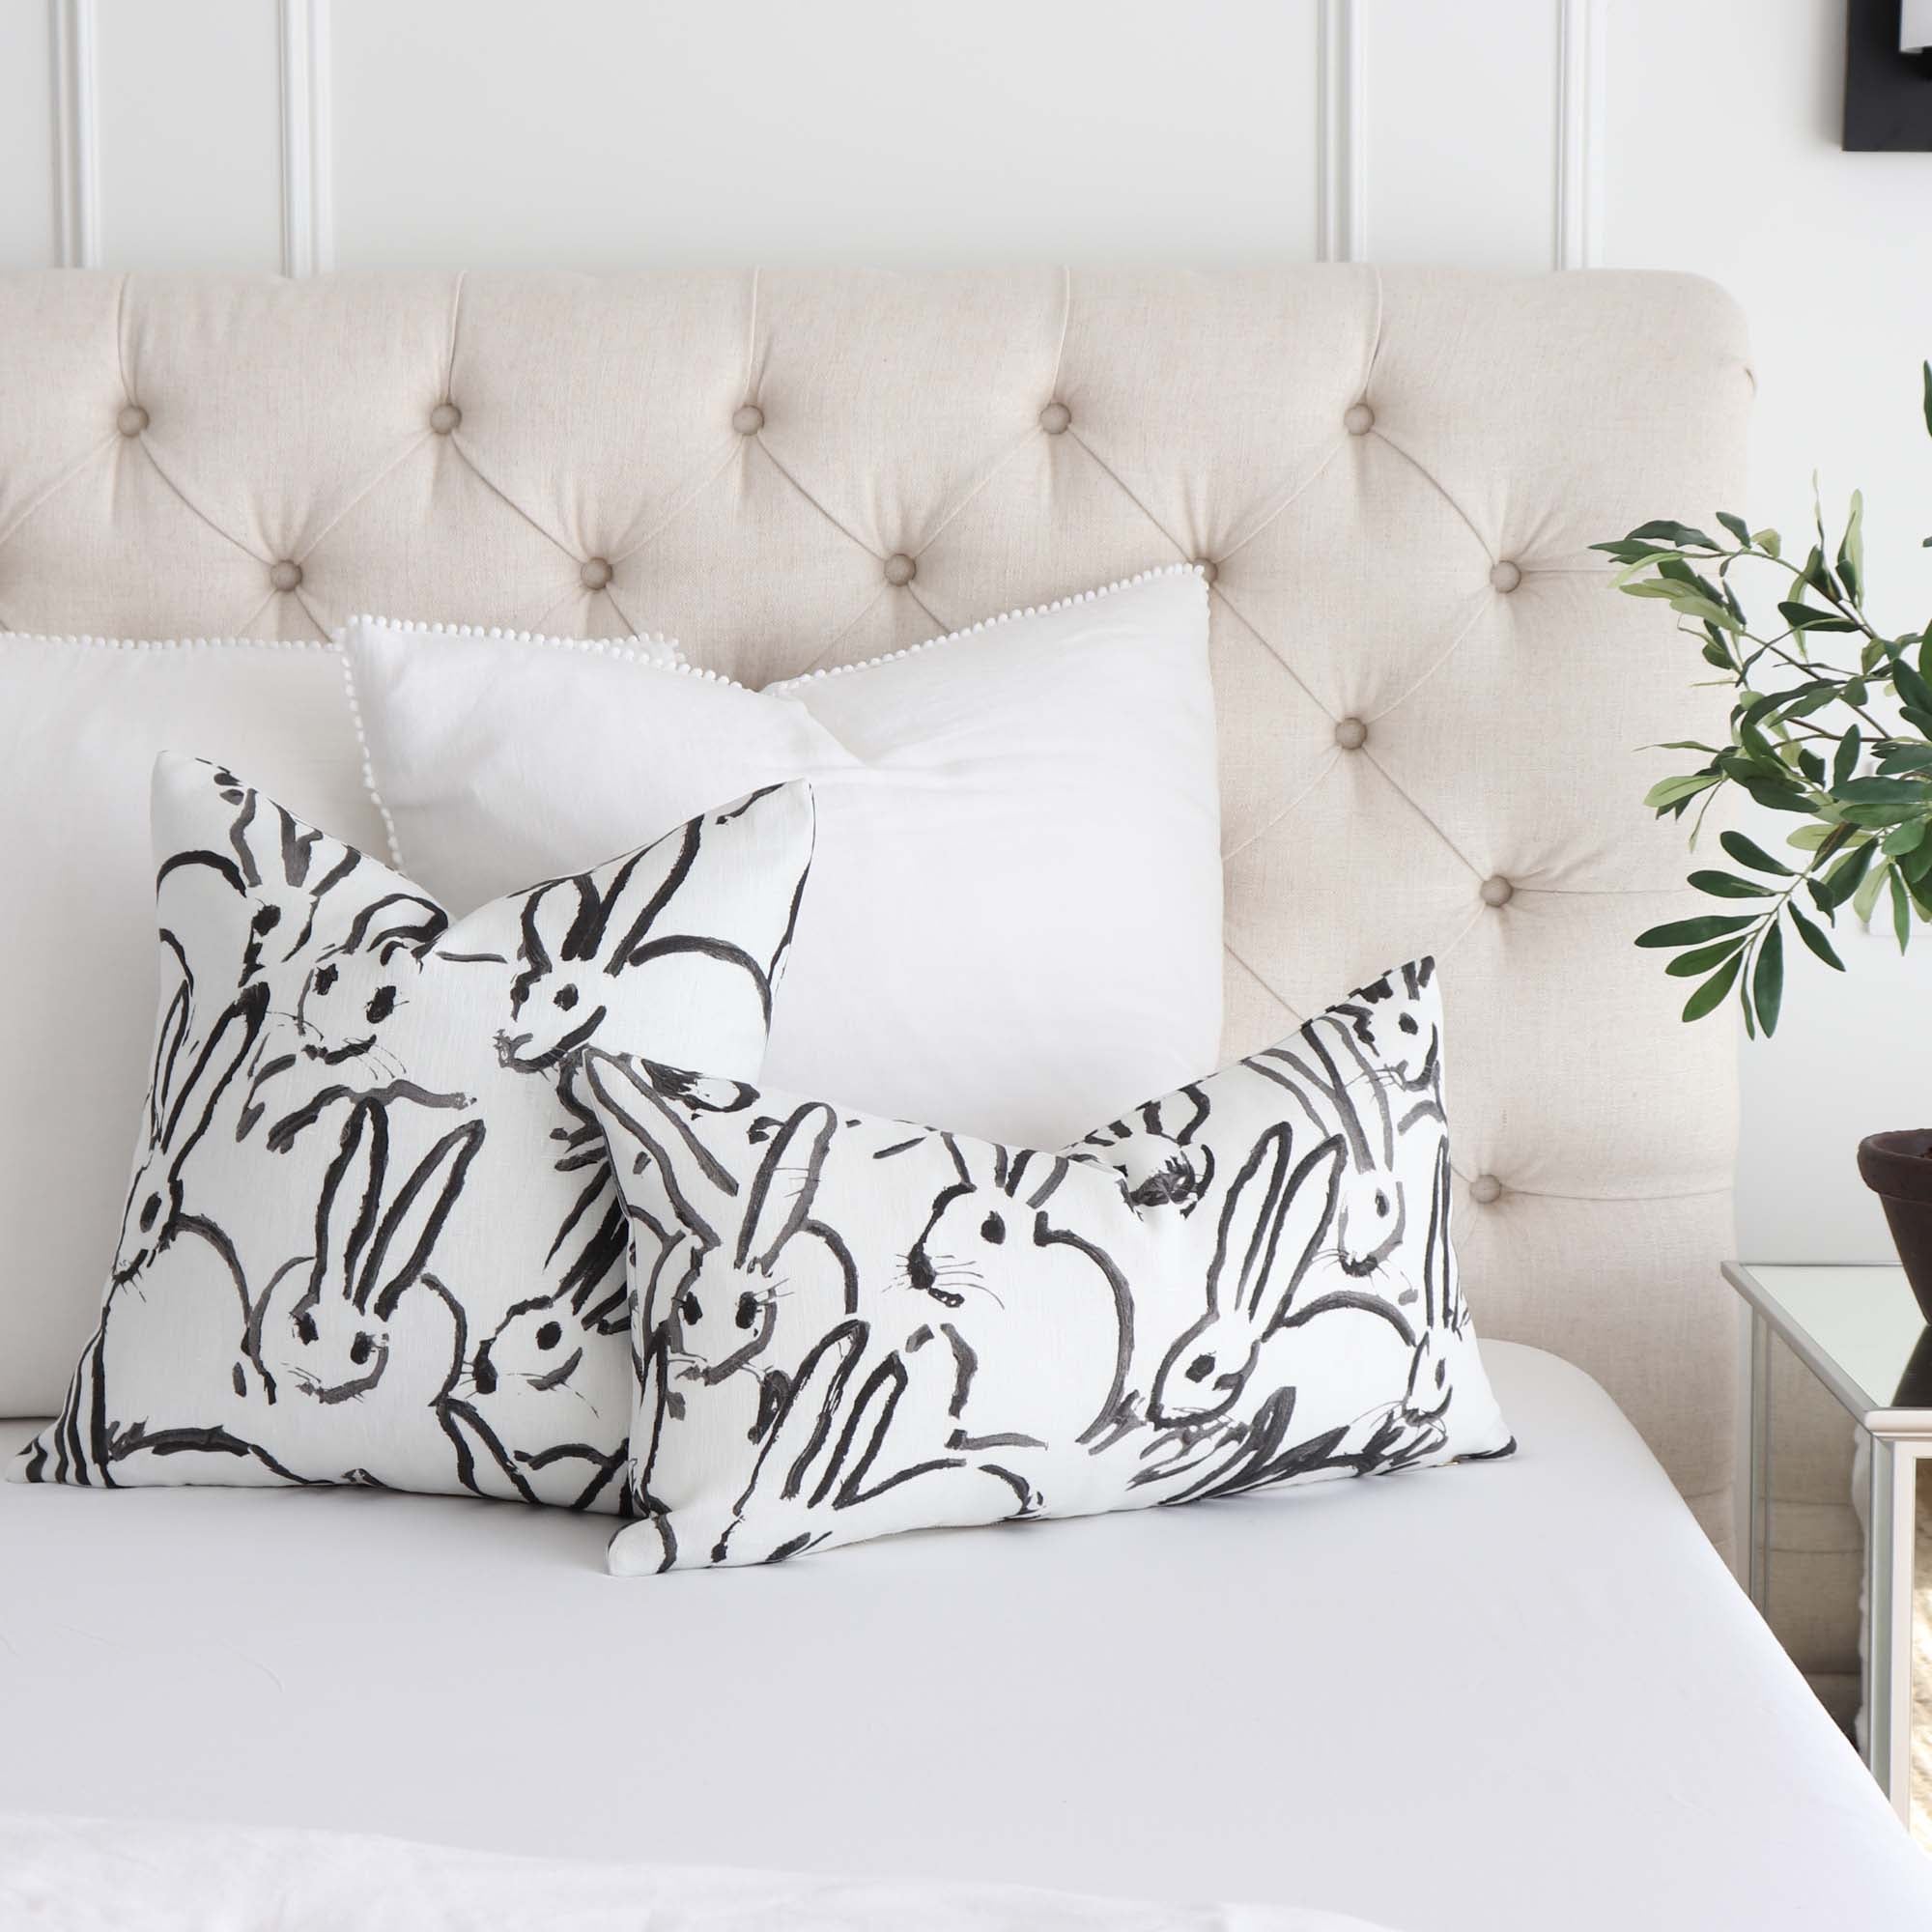 Lee Jofa Hutch Black and White Bunny Designer Luxury Throw Pillow Cover with Large White Euro Throw Pillows